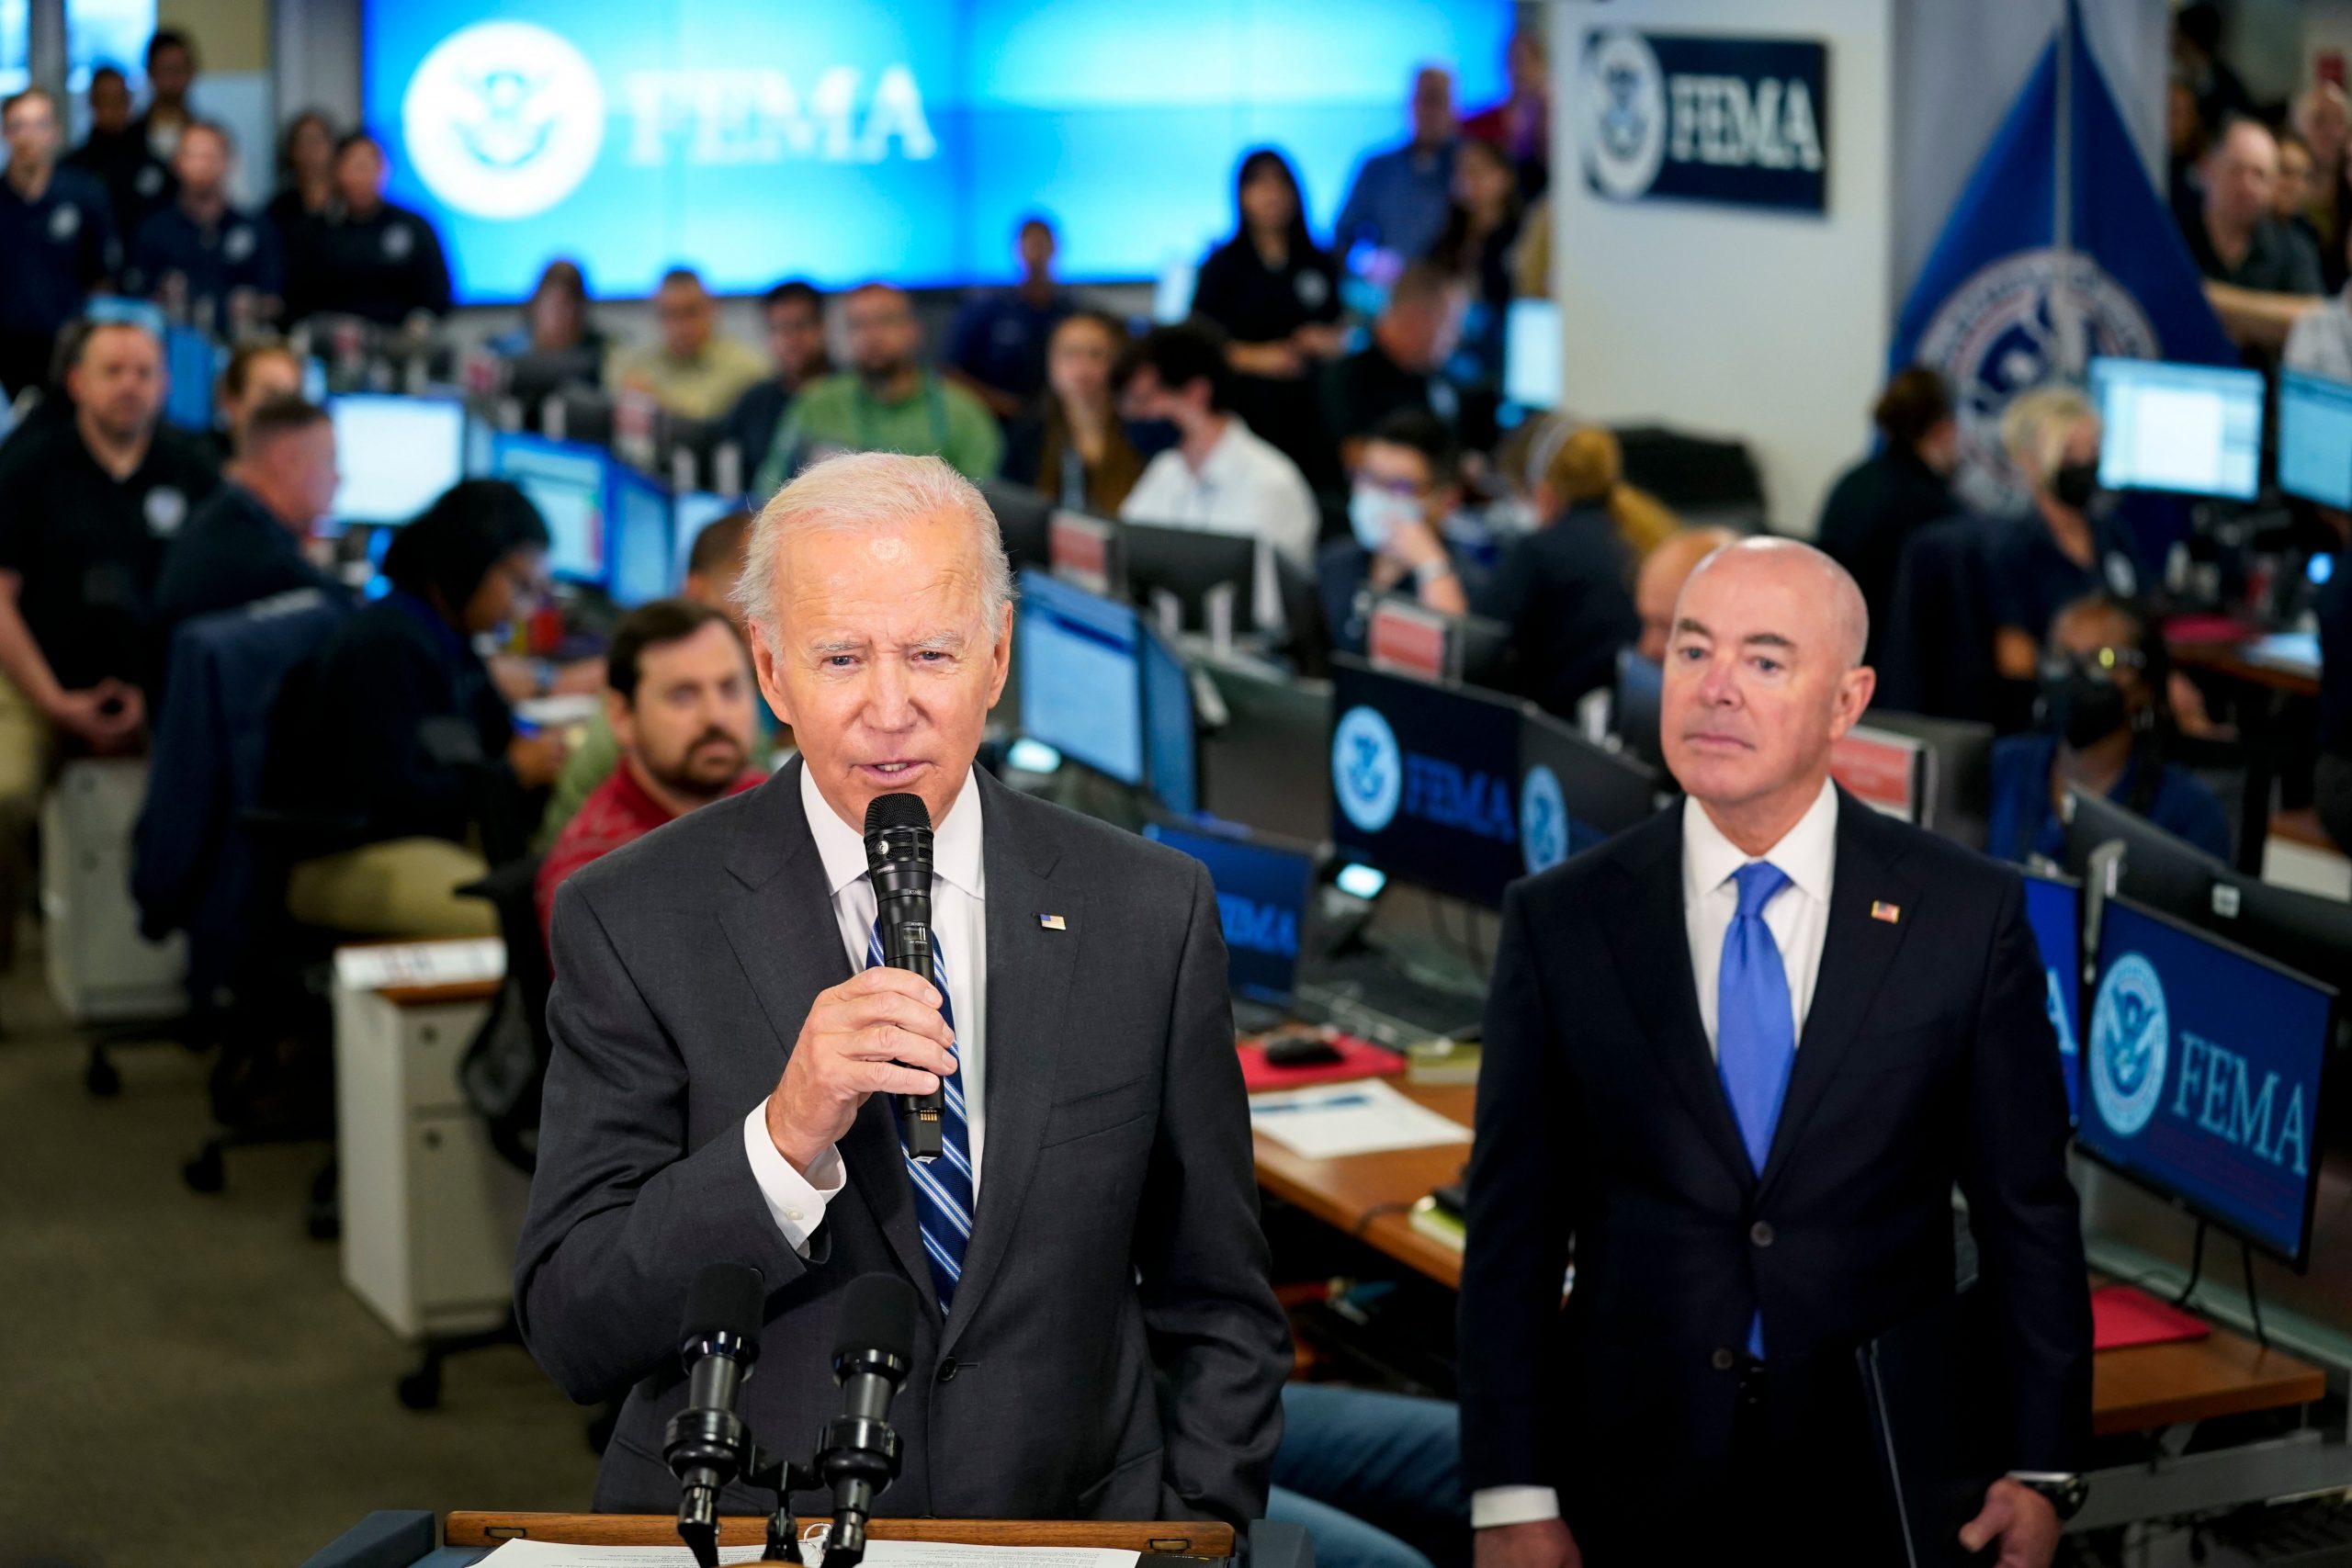 Joe Biden to focus on hurricane victims in Florida, not politics